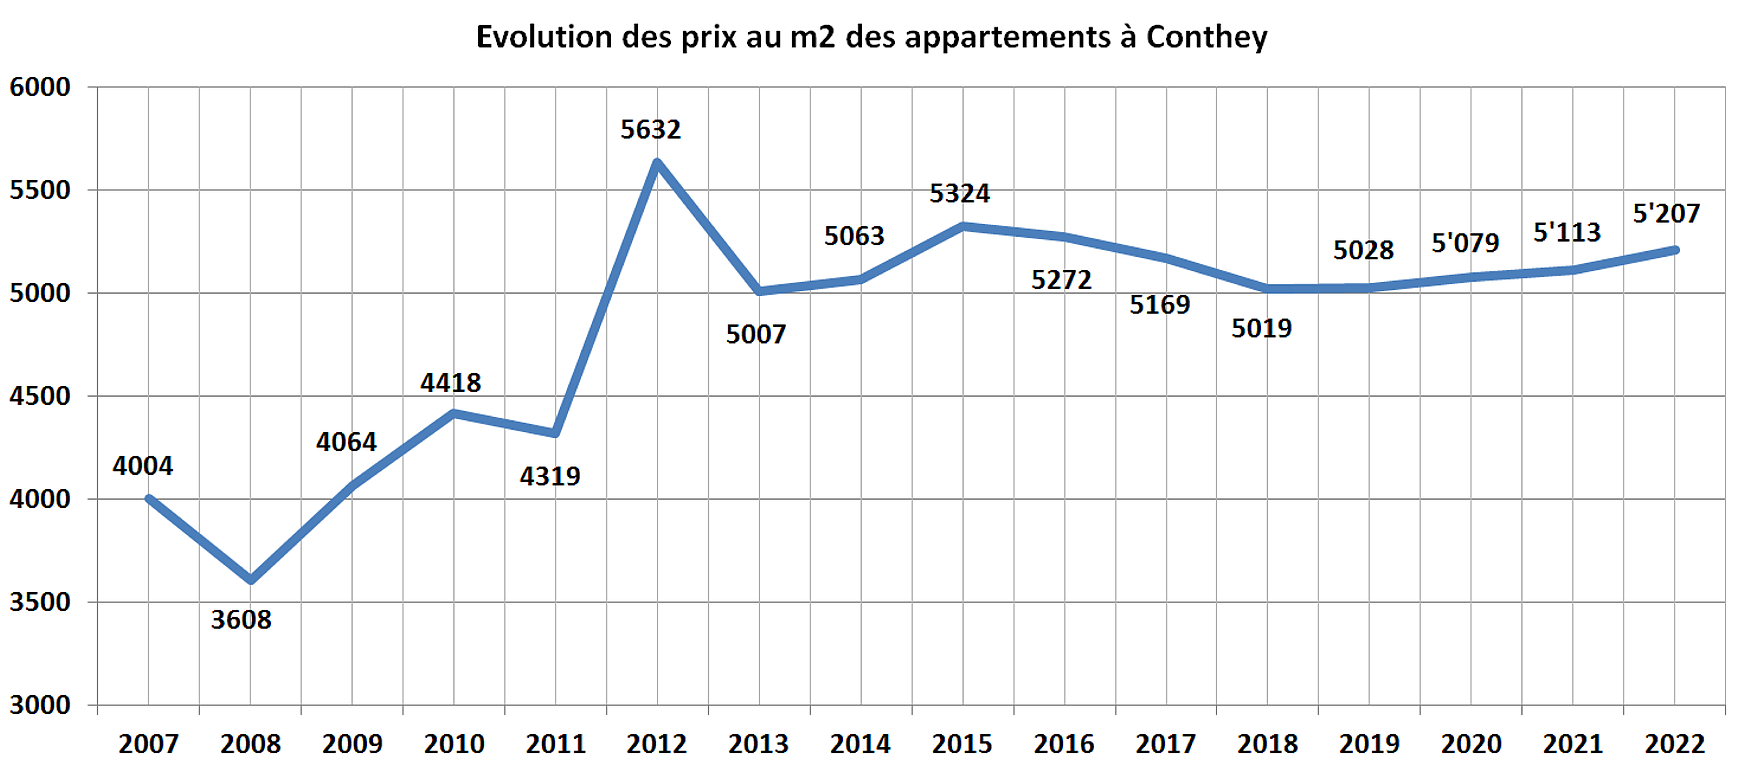 evolution prix m2 appartement conthey 2022